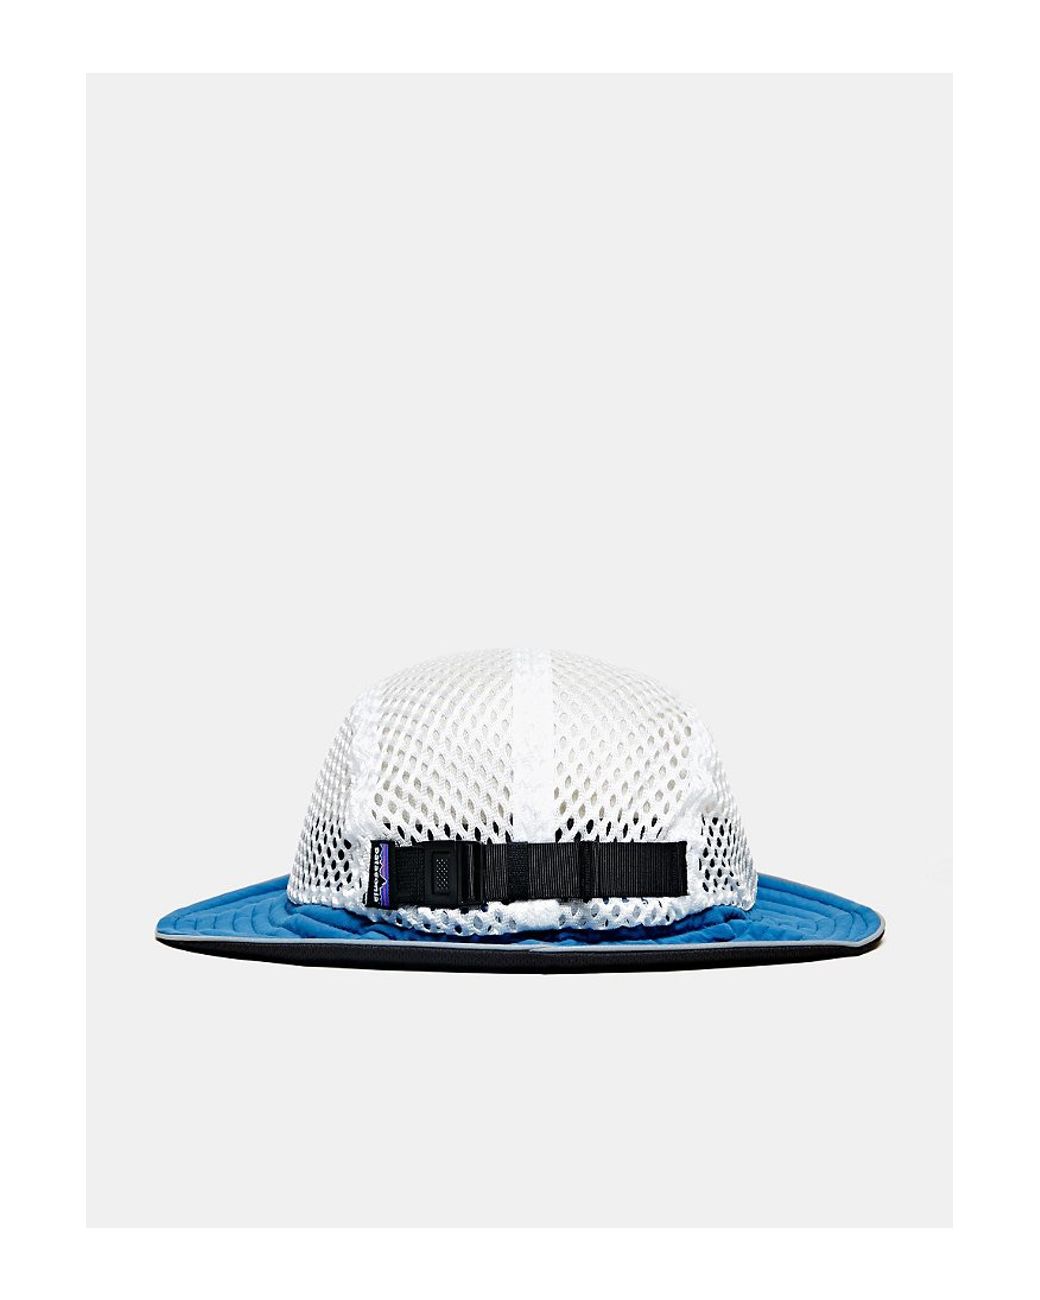 Patagonia Duckbill Bucket Hat in Blue for Men | Lyst